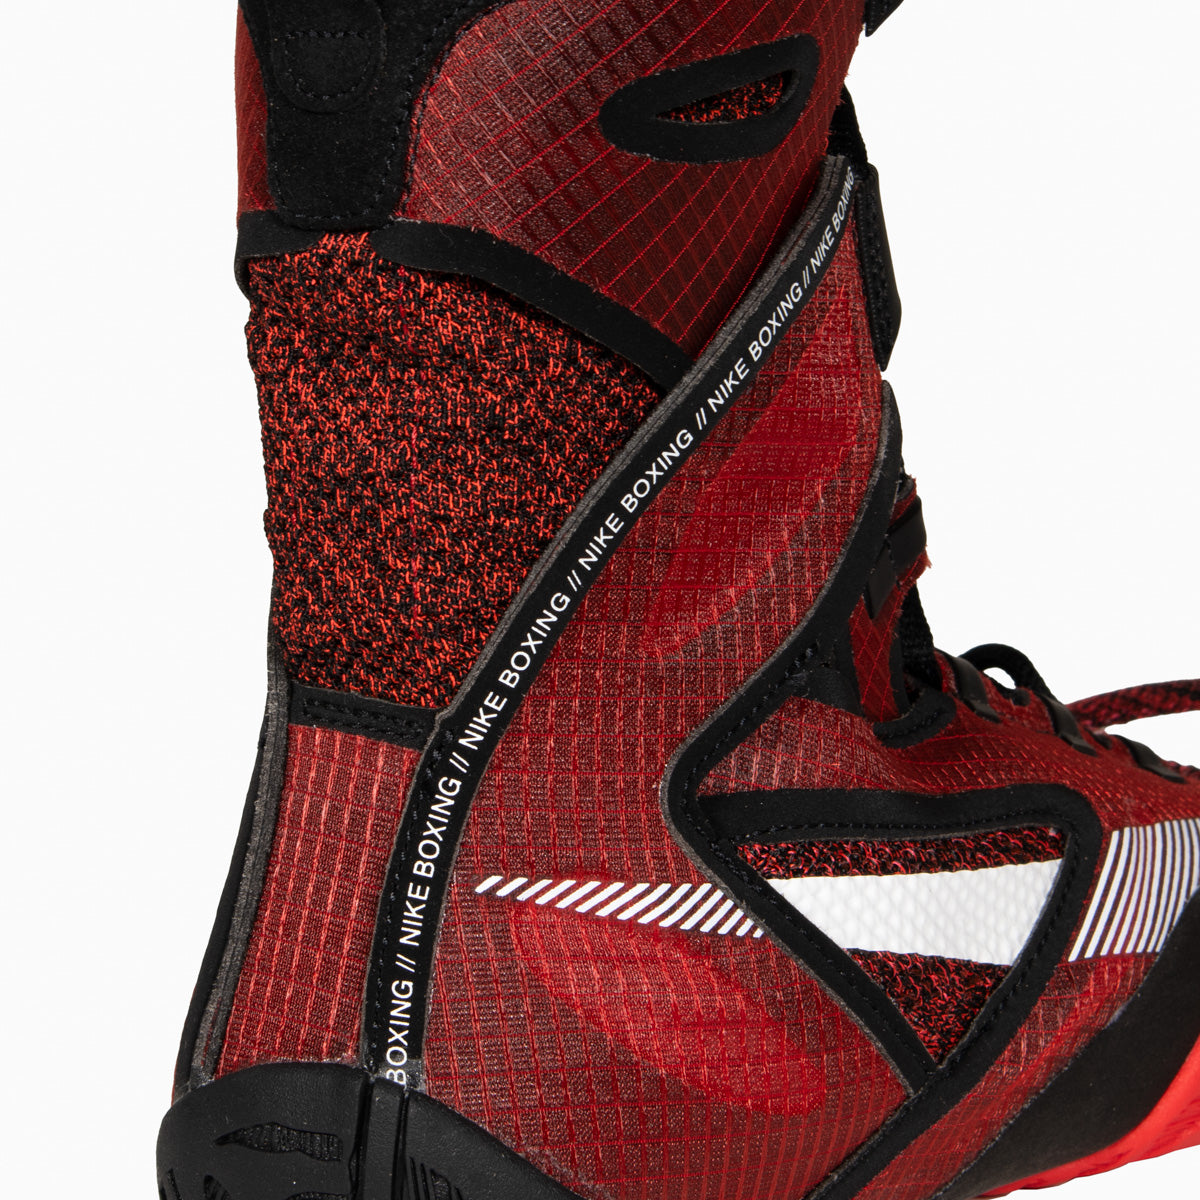 Chaussures de boxe Nike Hyperko 2.0 Rouge